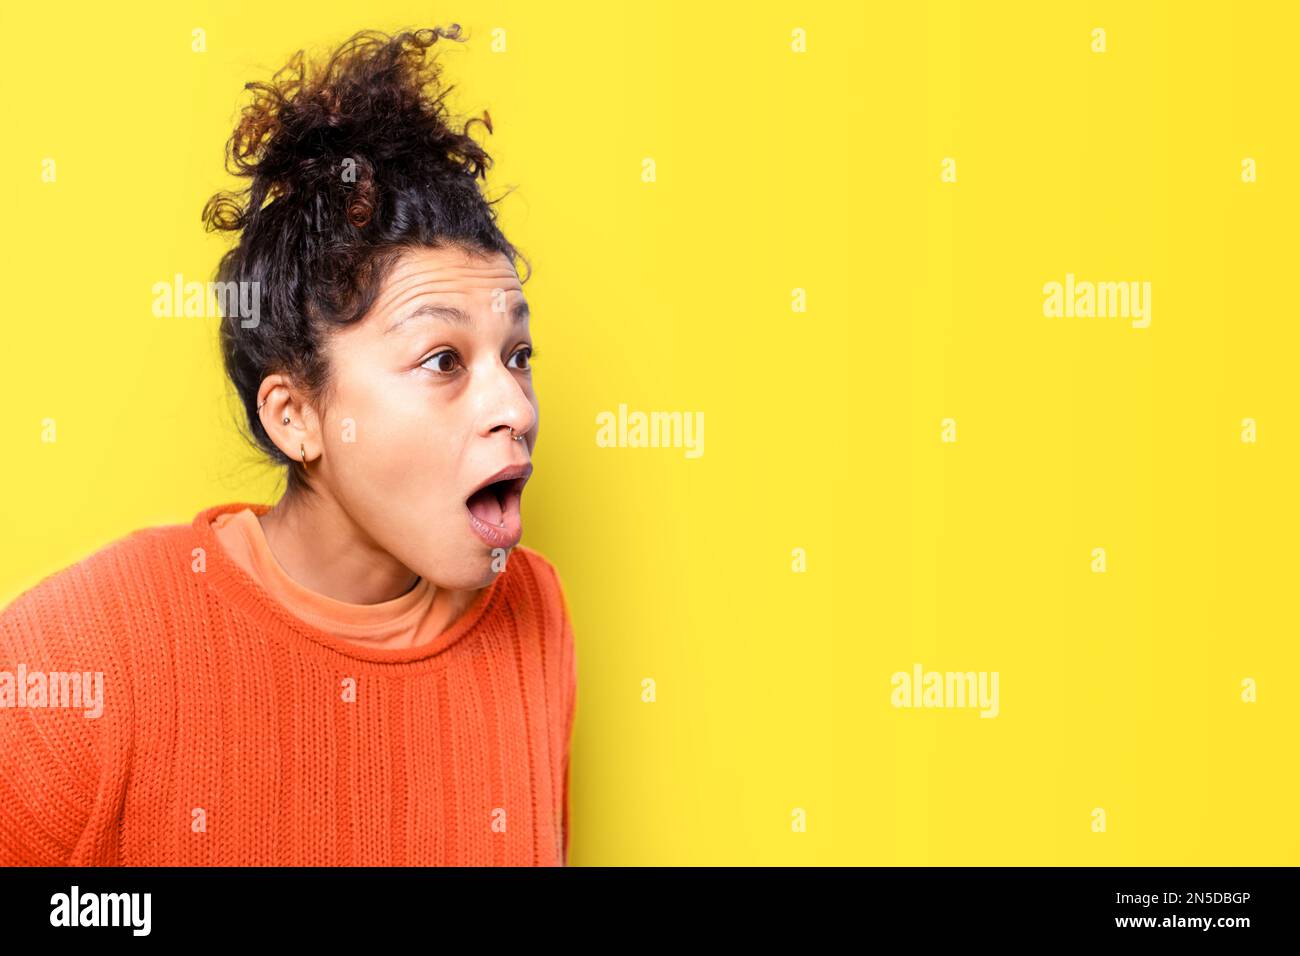 Amazed and astonished face expression on yellow background Stock Photo